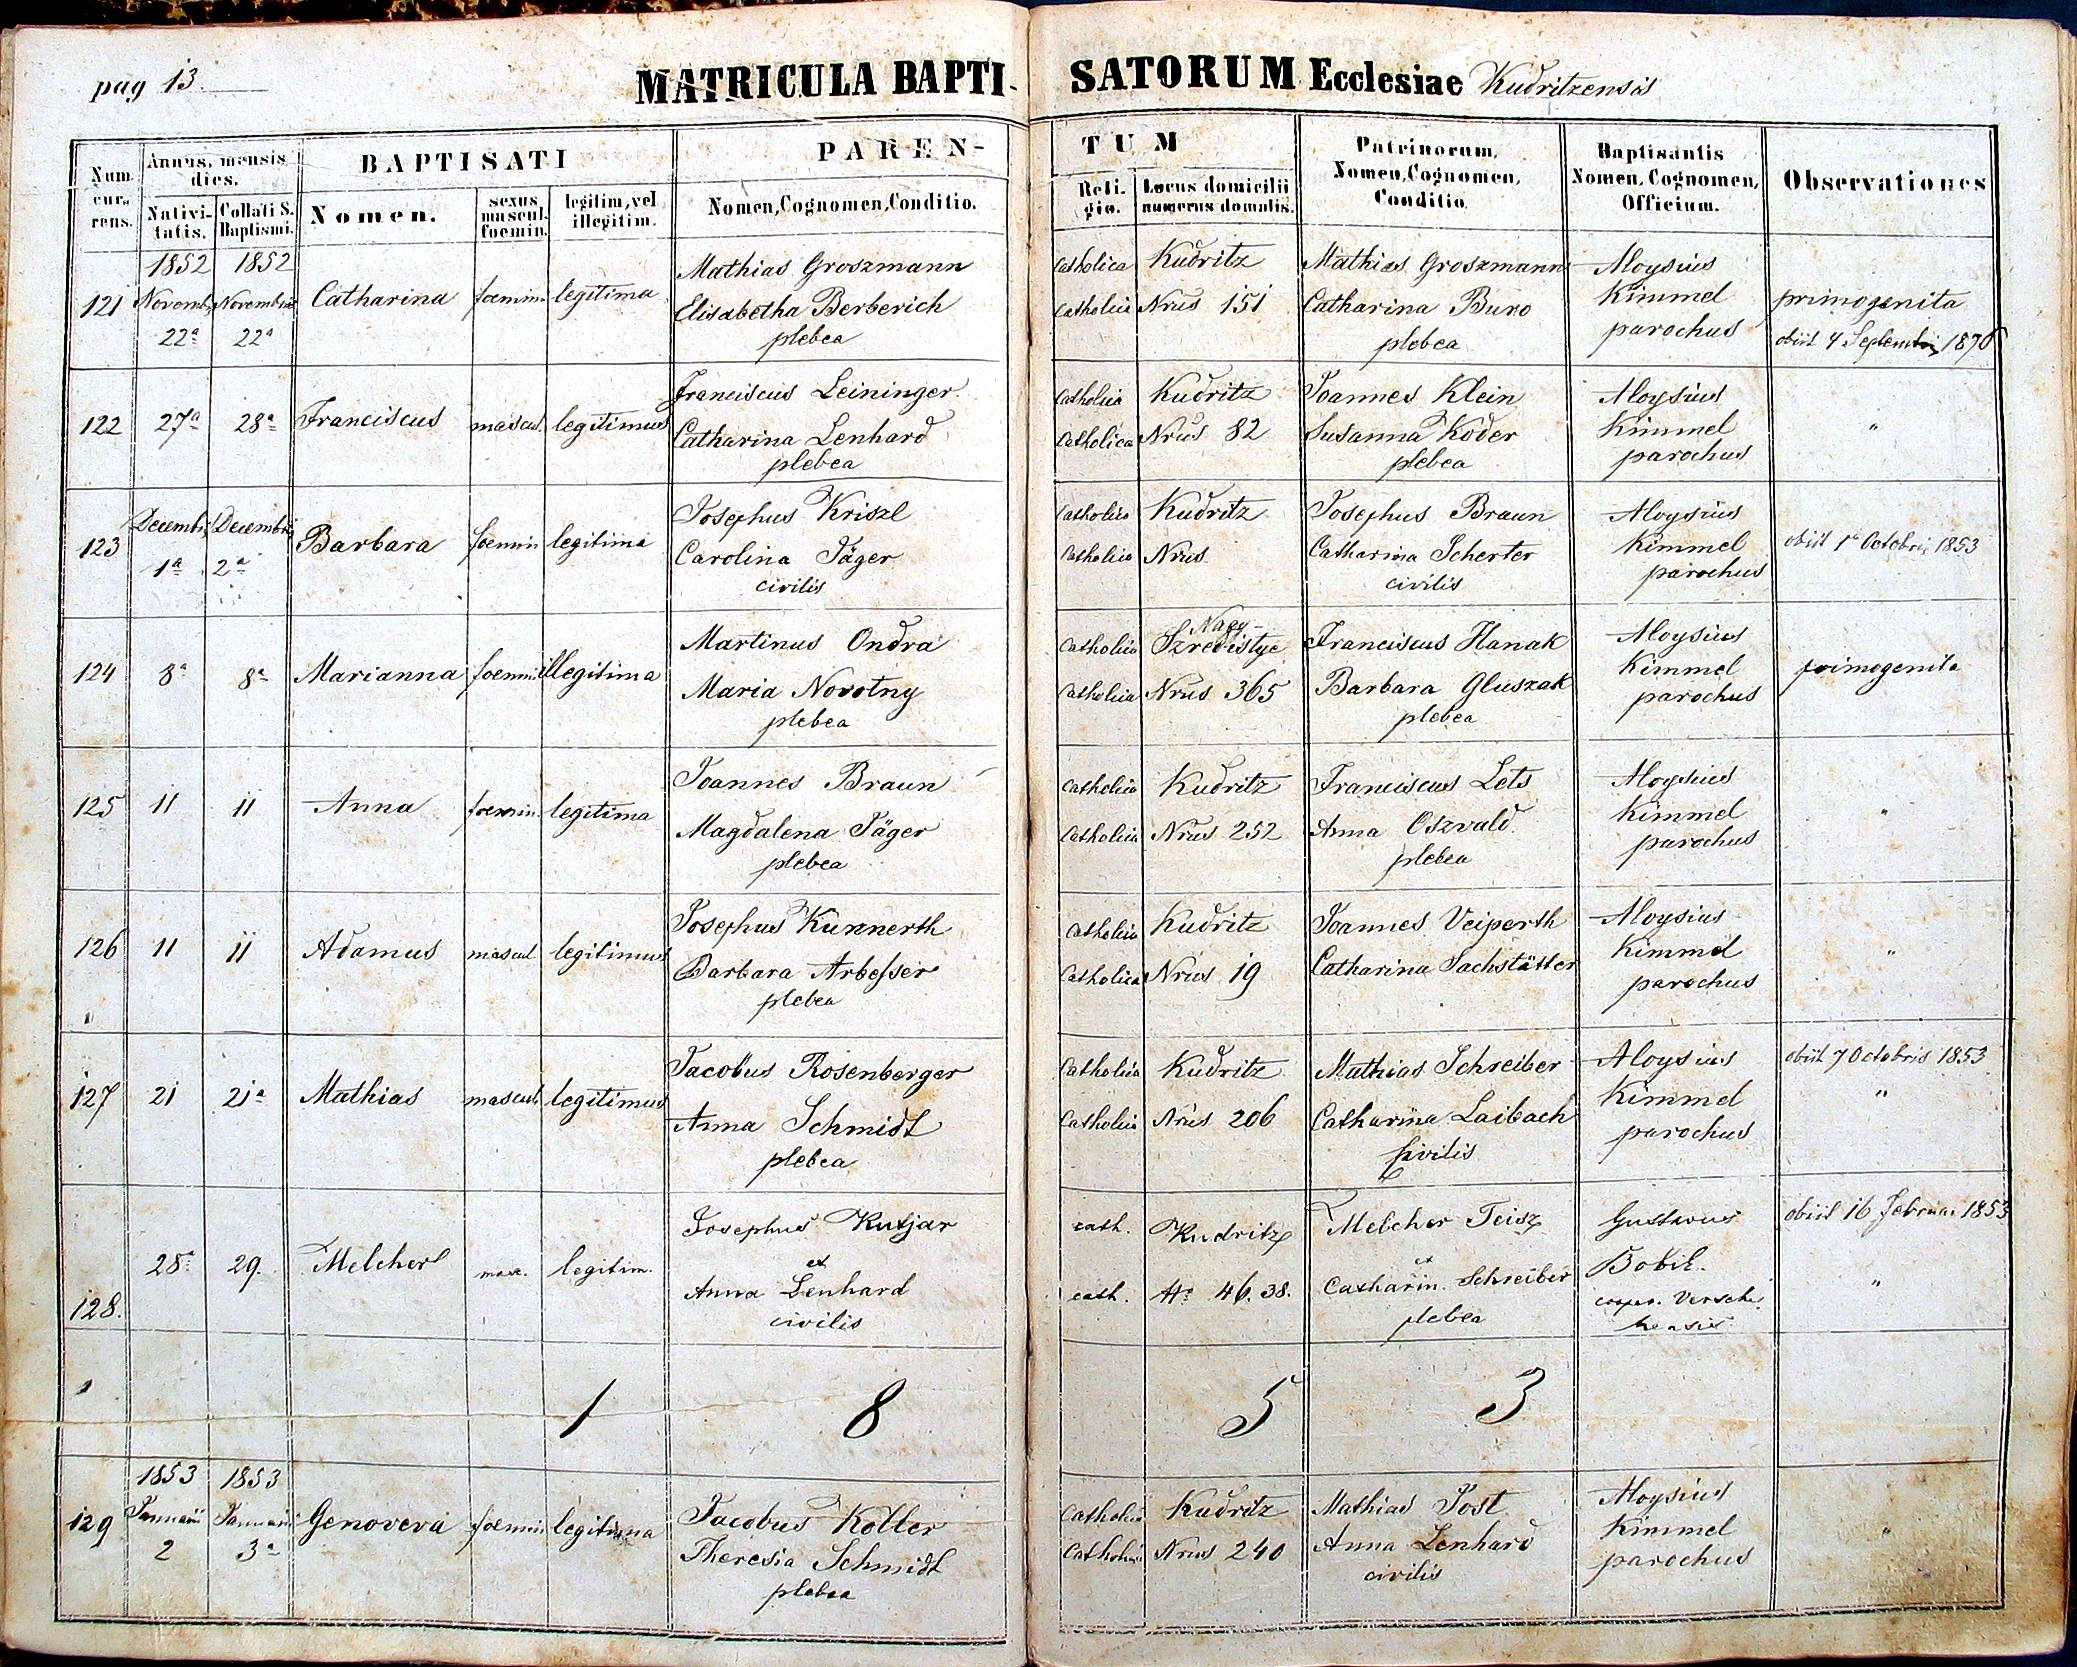 images/church_records/BIRTHS/1852-1870B/013